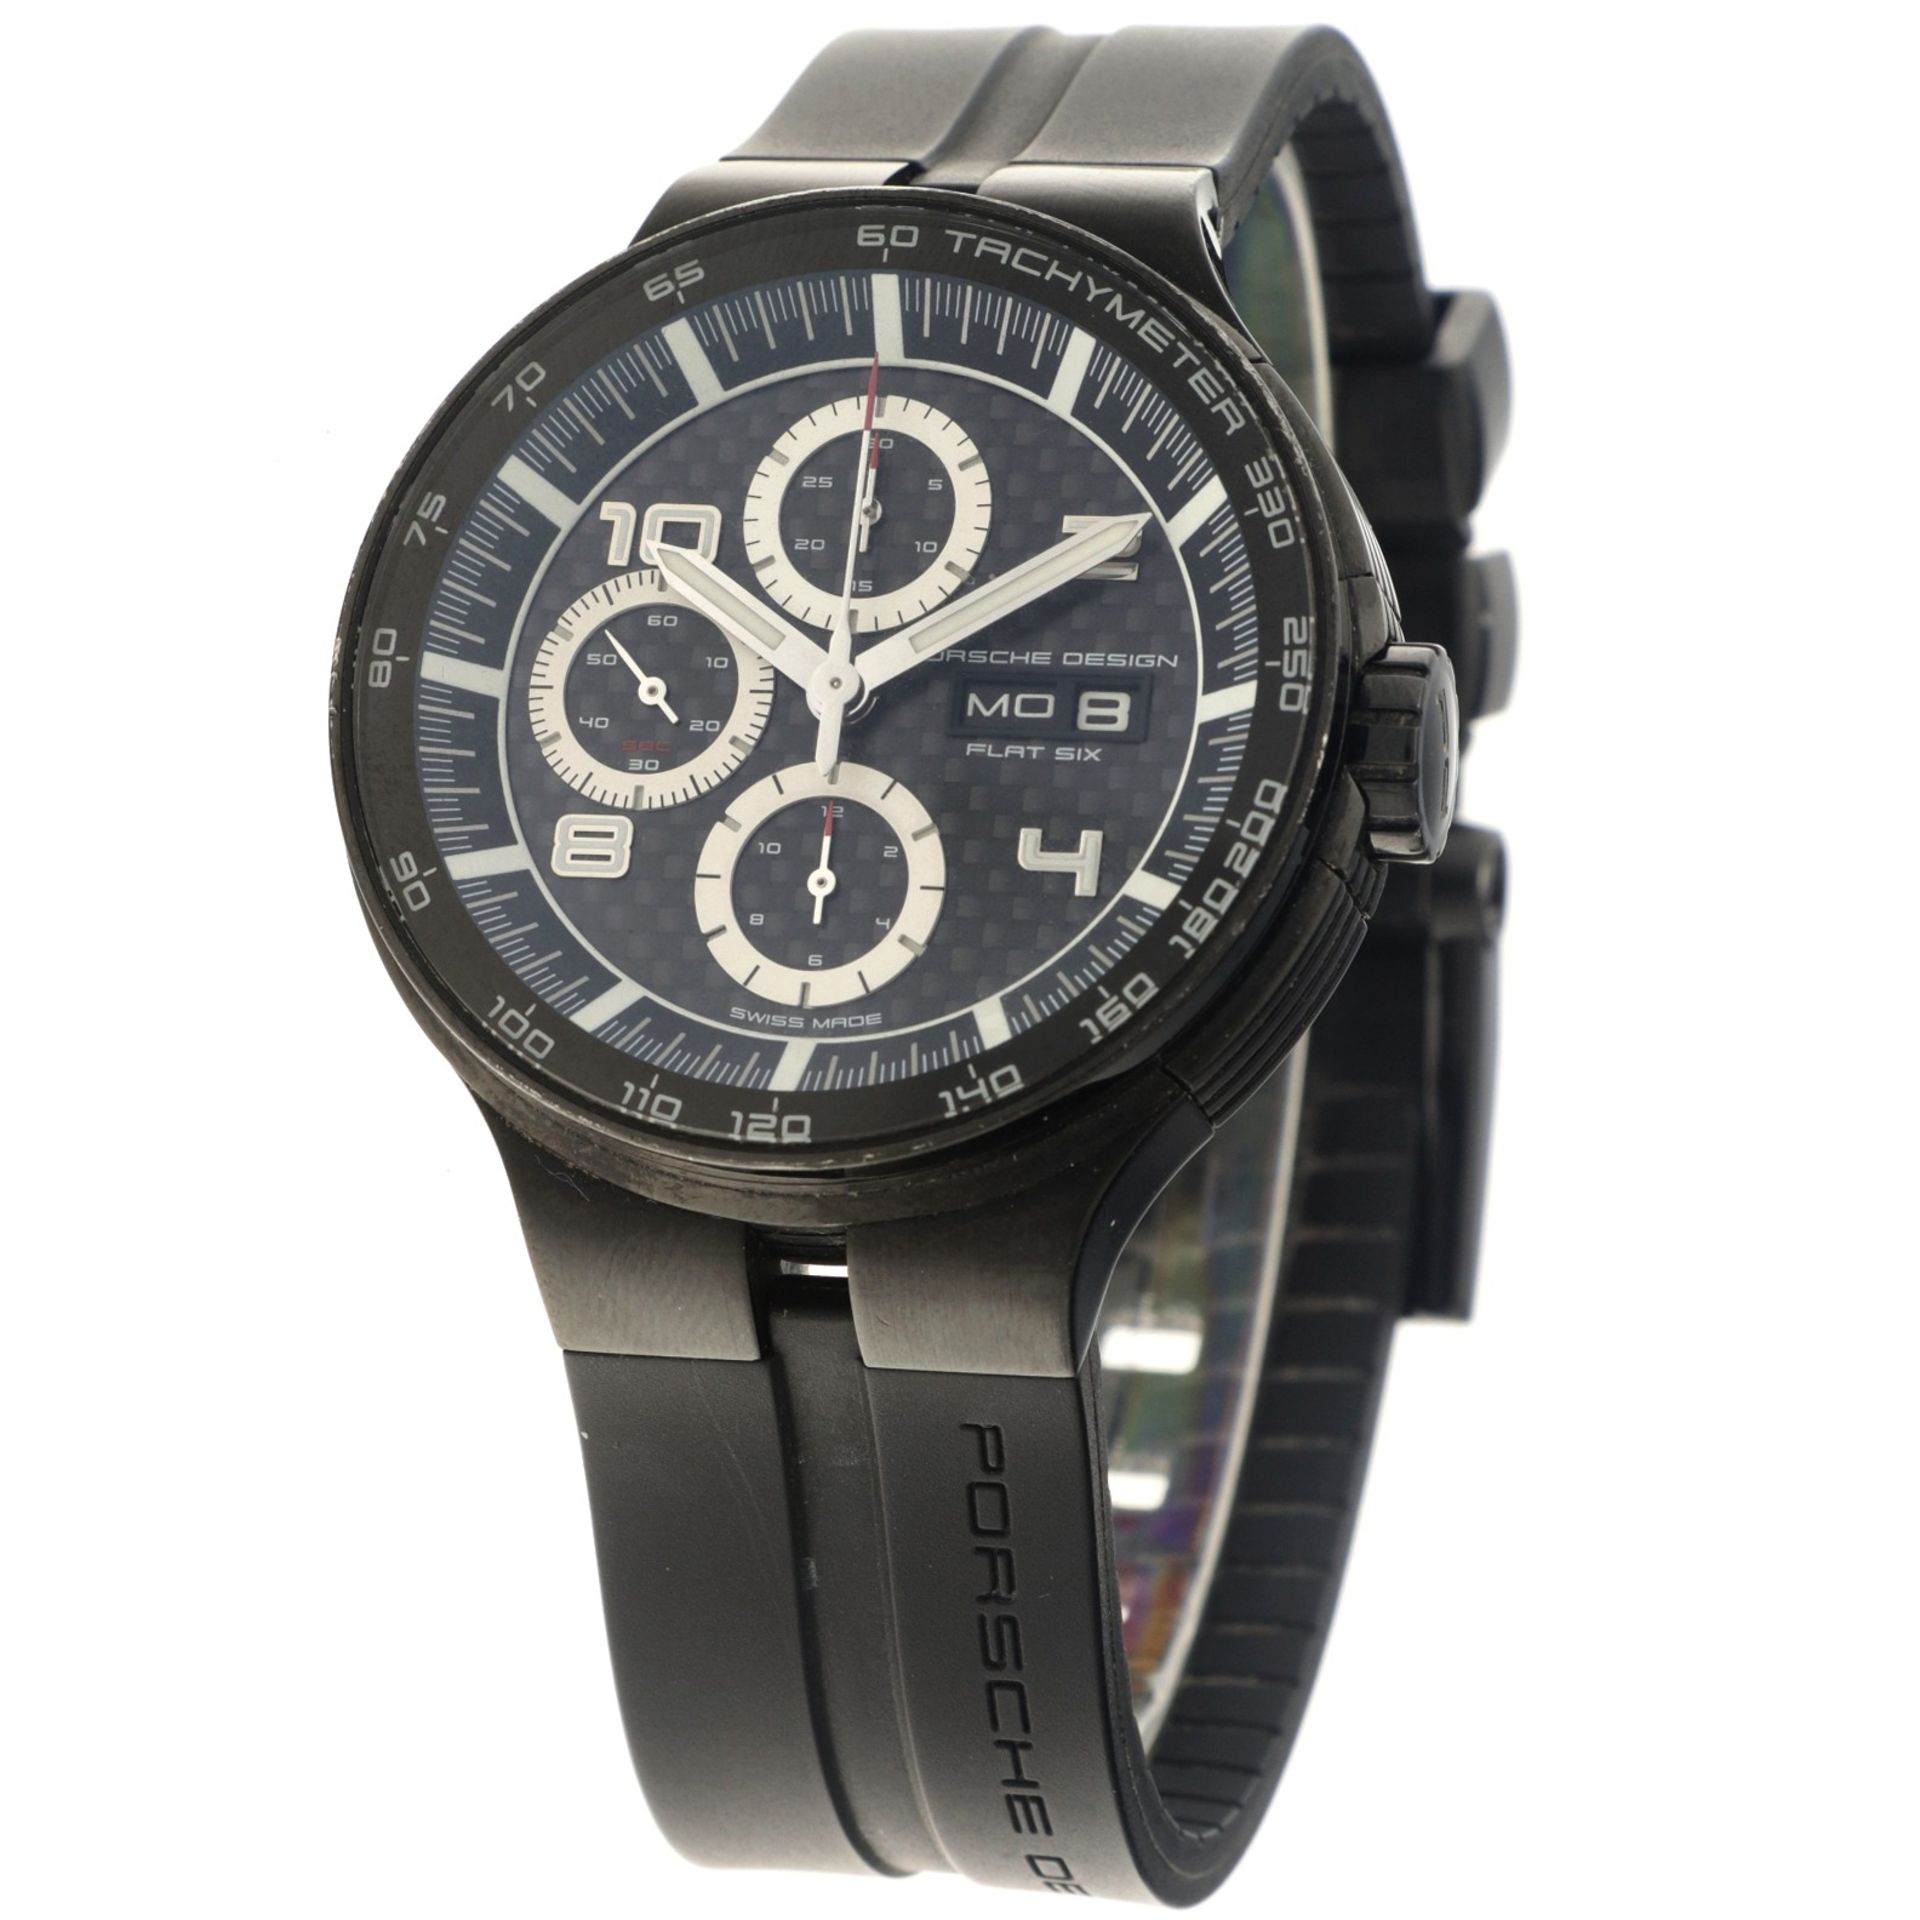 No Reserve - Porsche Design Flat Six 6360.43 - Men's watch - 2015. - Image 2 of 6